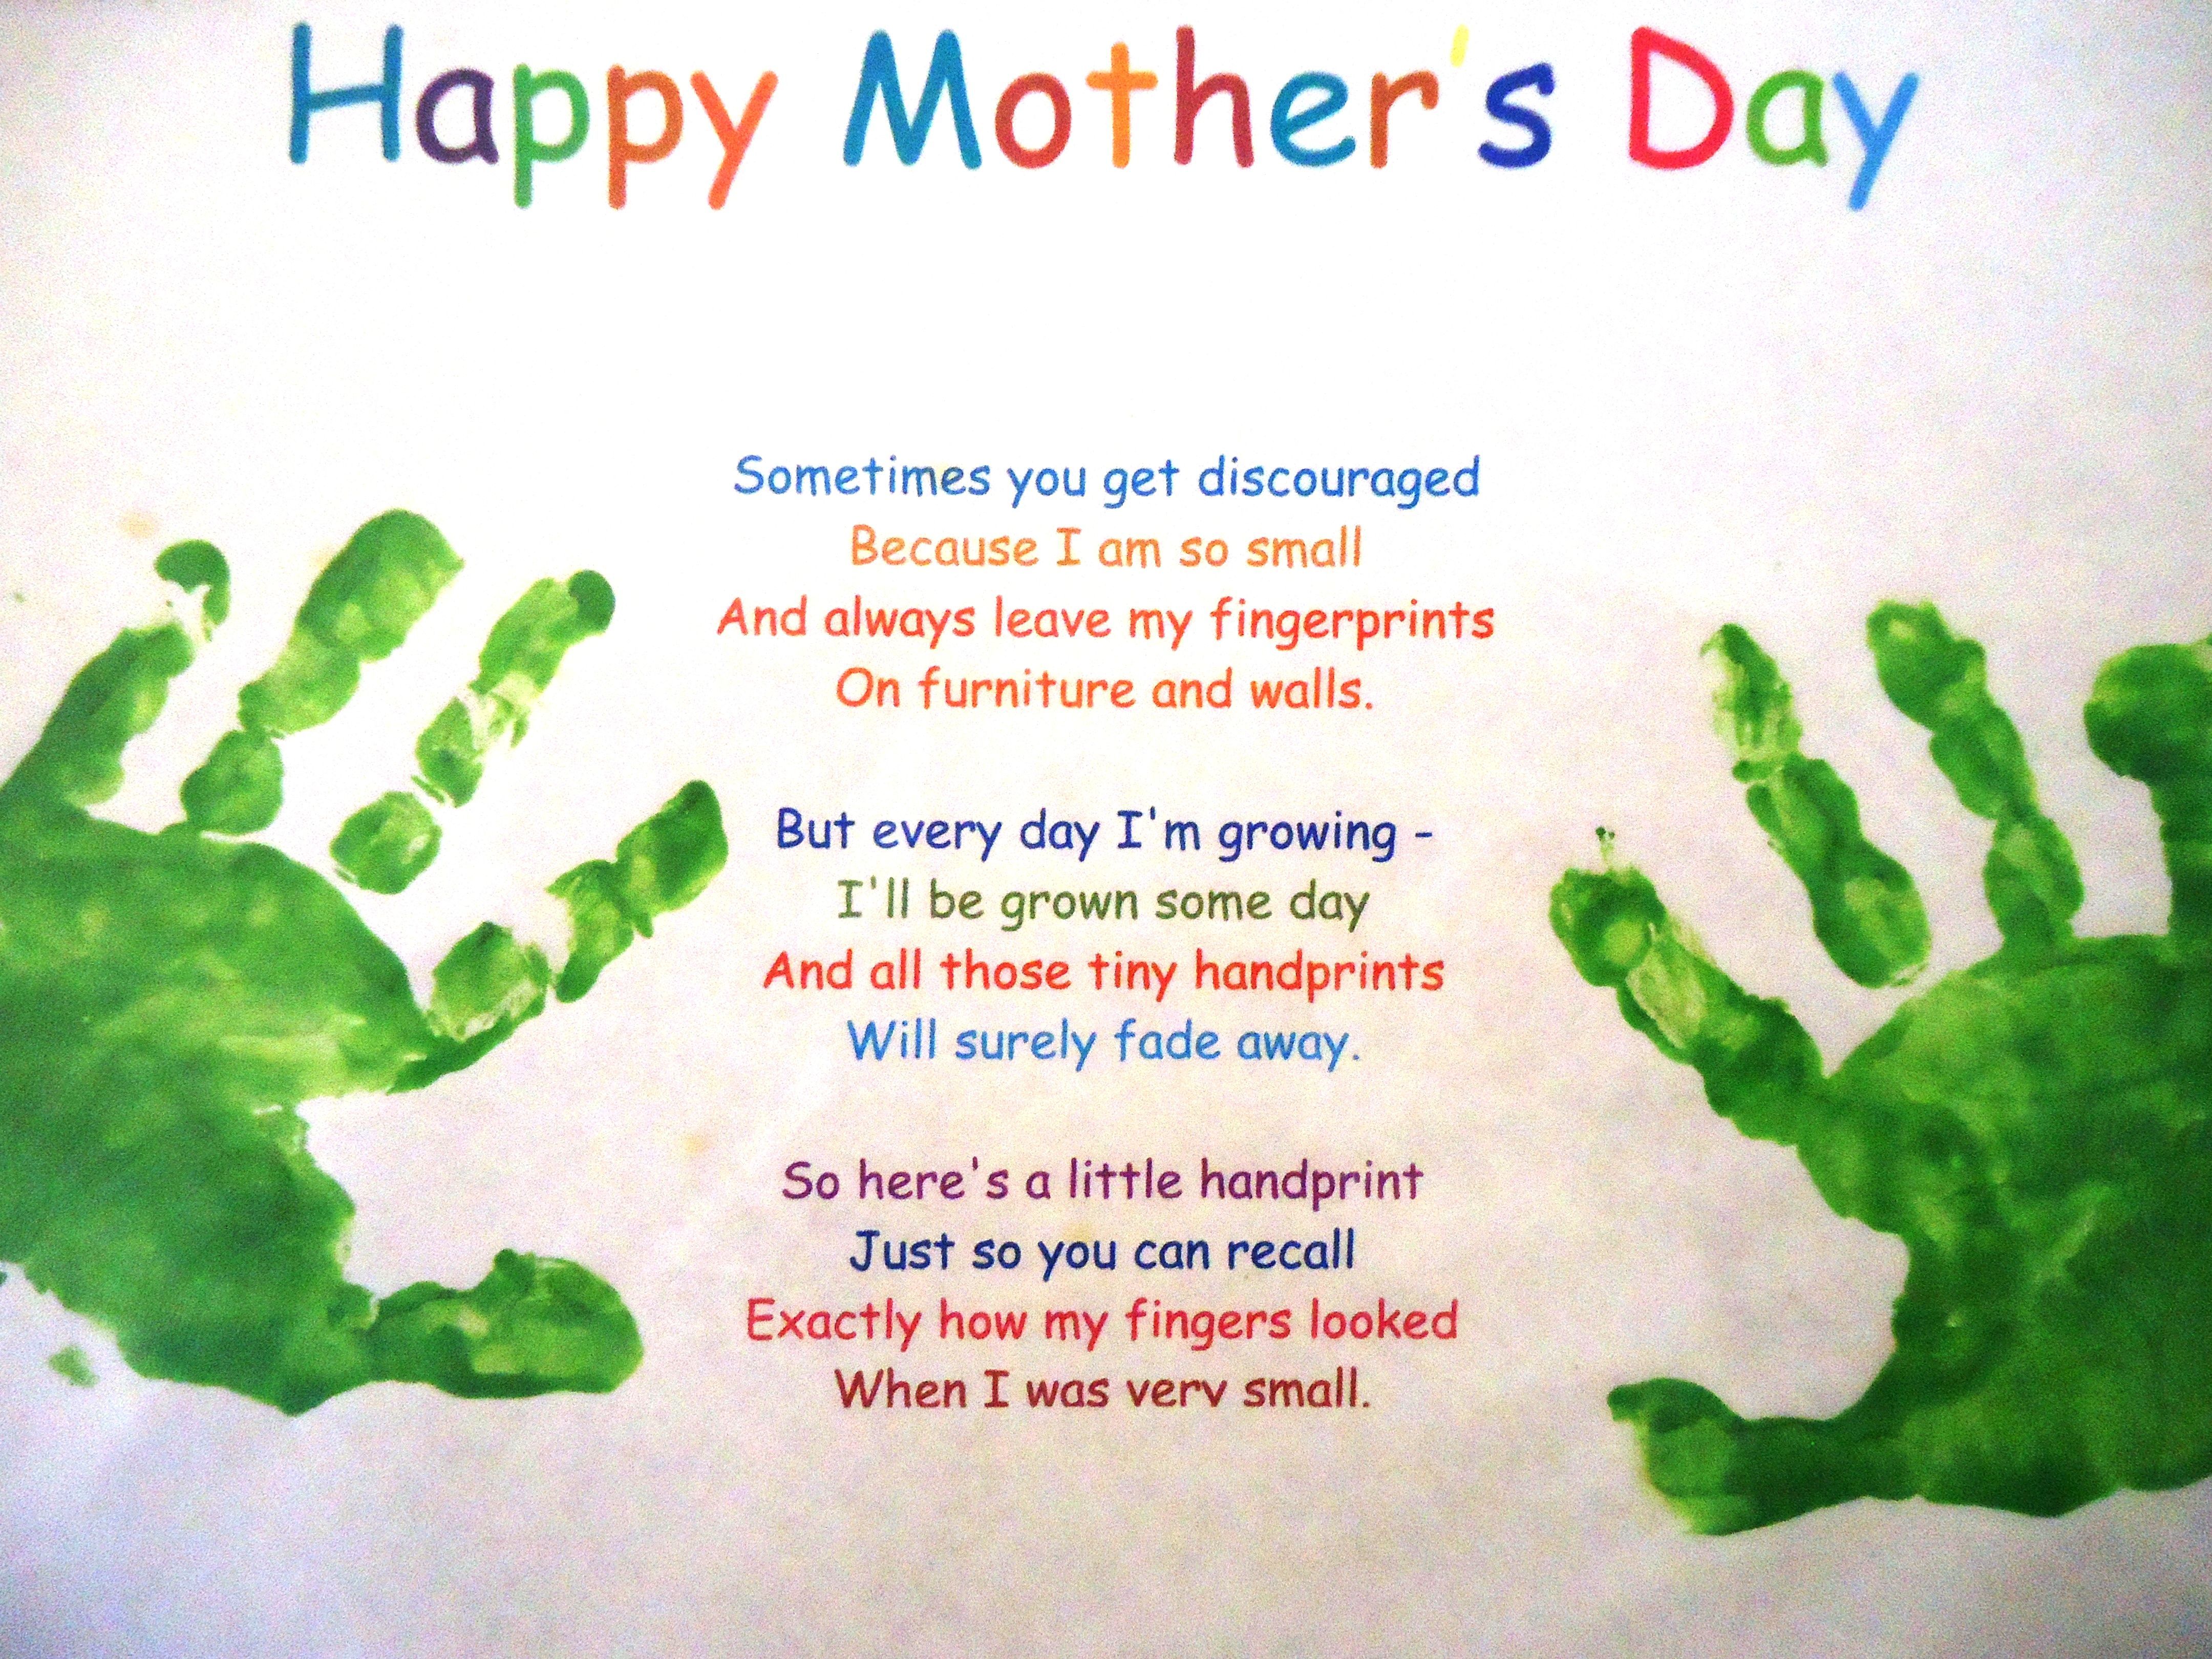 Mother's day poem 4k Ultra HD Wallpaper. Background Image